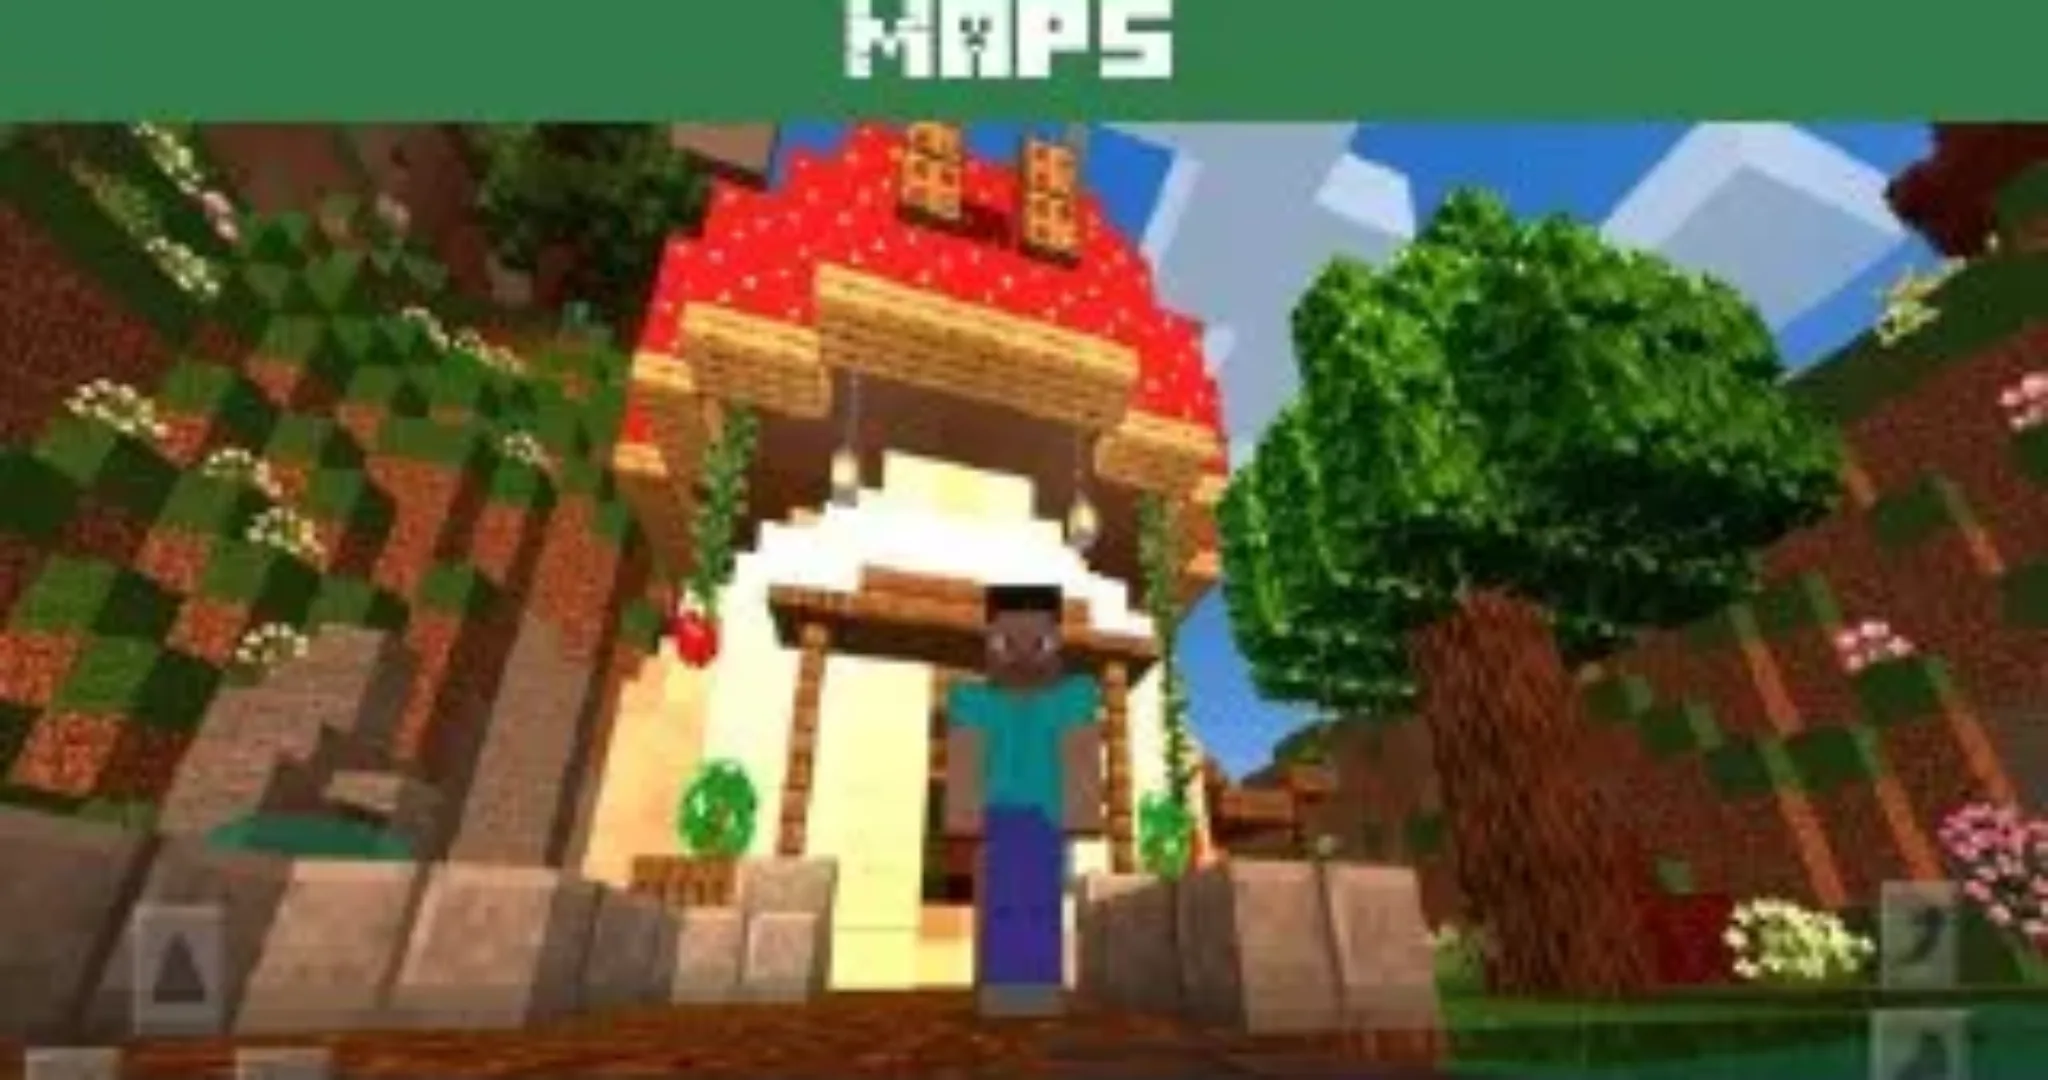 Mushroom Castle Map for Minecraft PE